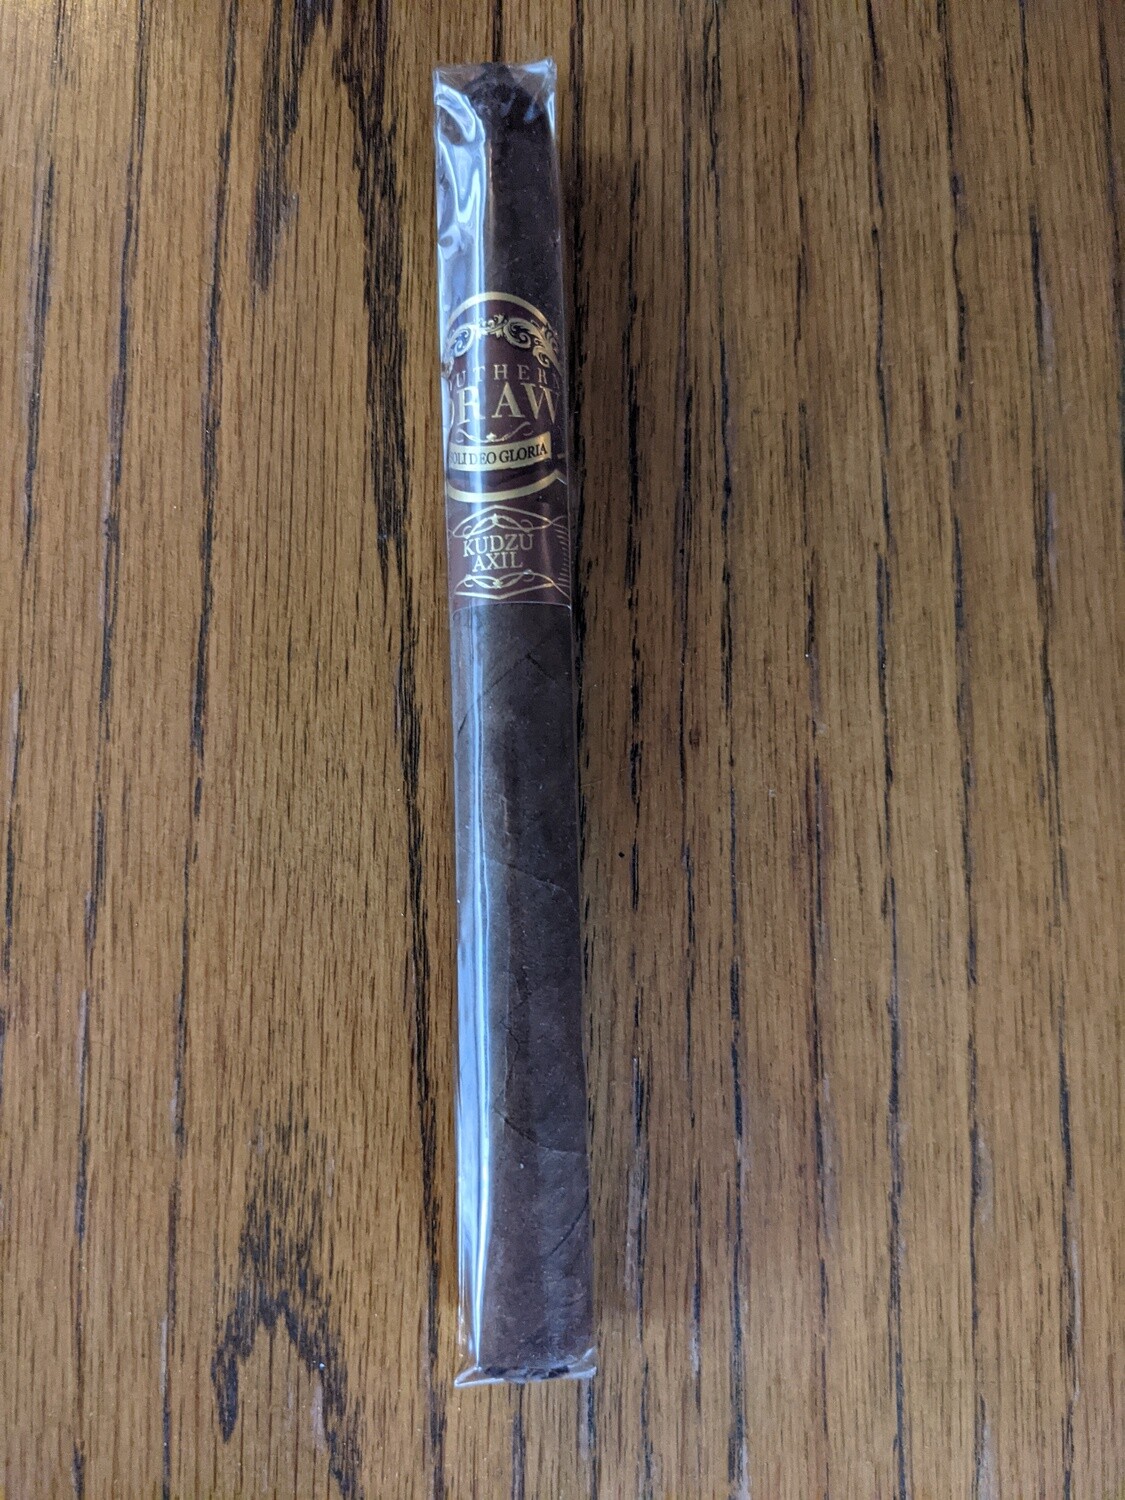 Southern Draw Kudzu Oscuro Lancero 6.5 x 40 Single Cigar